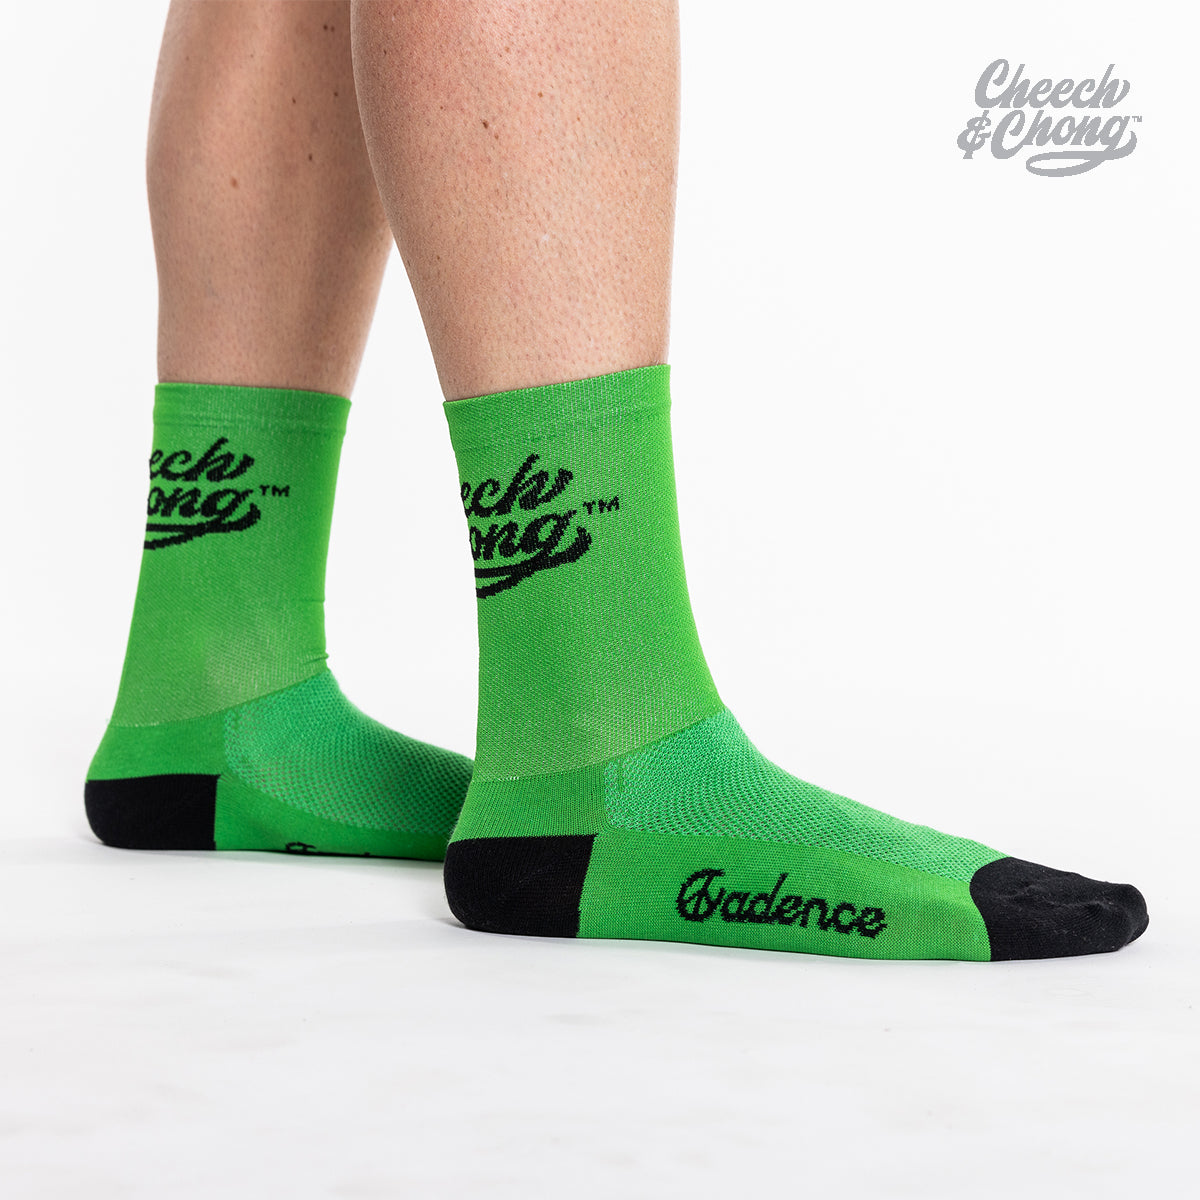 Cadence x Cheech & Chong Socks [Green]